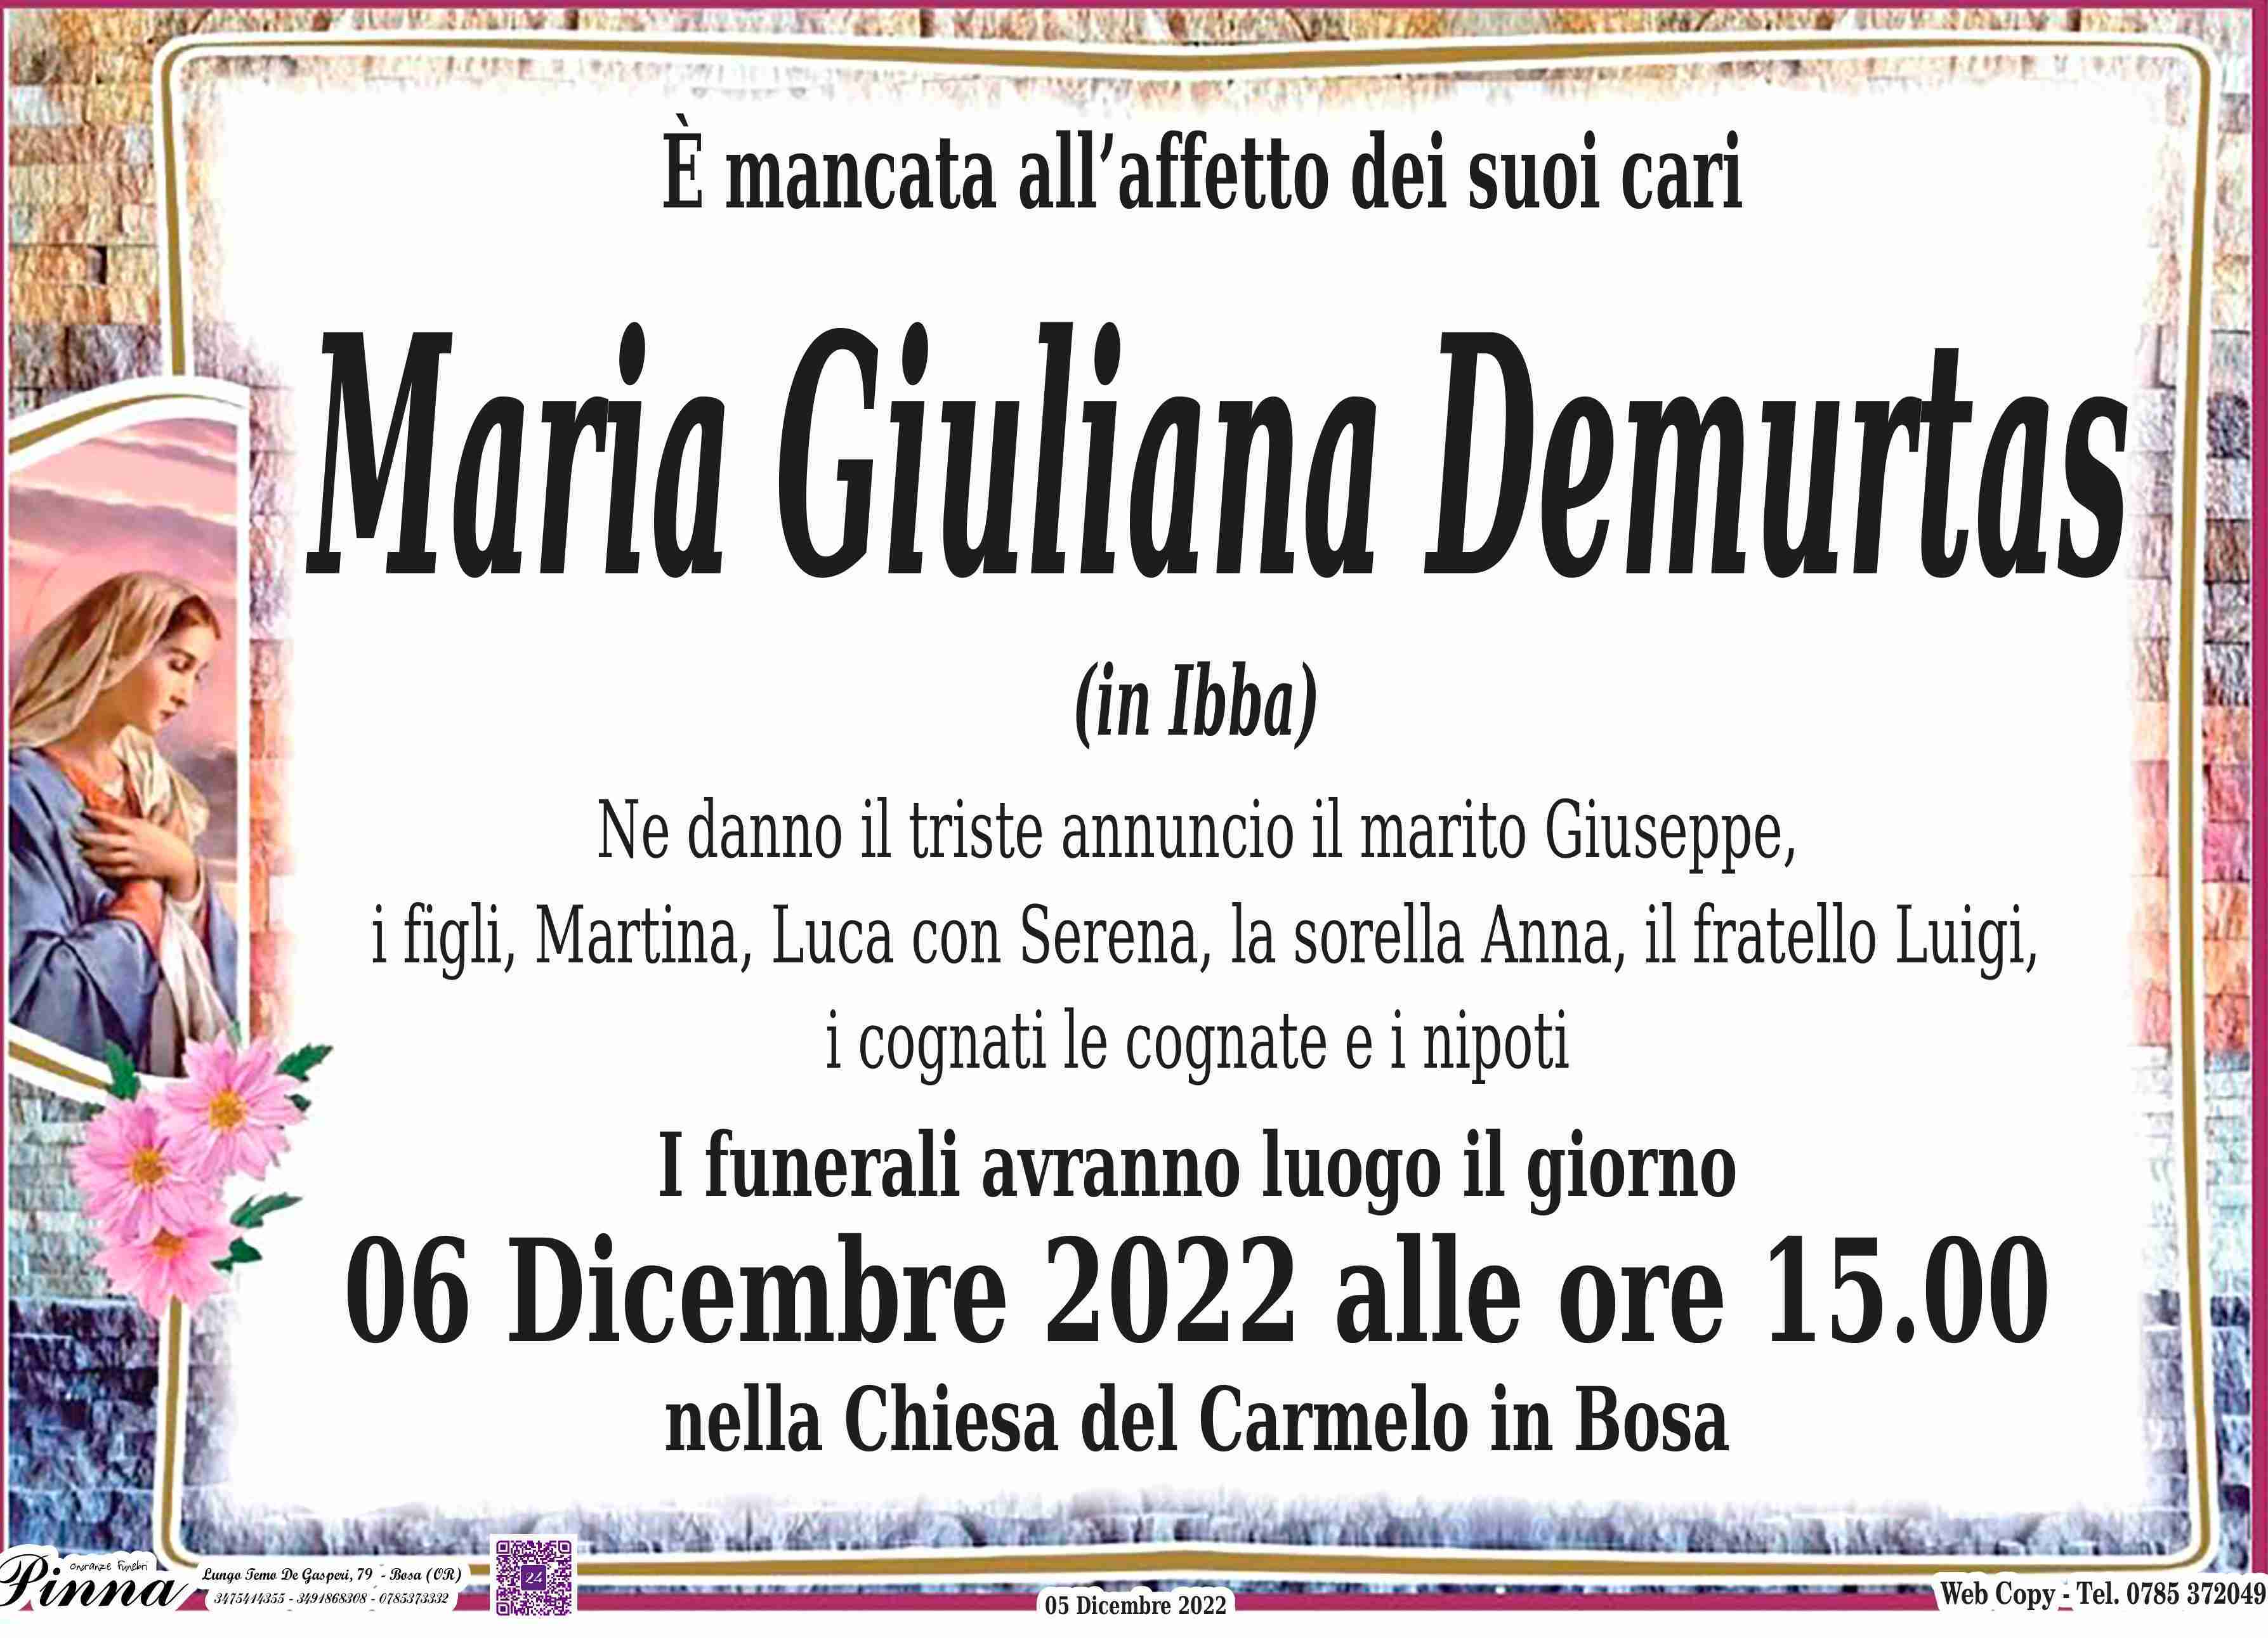 Maria Giuliana Demurtas